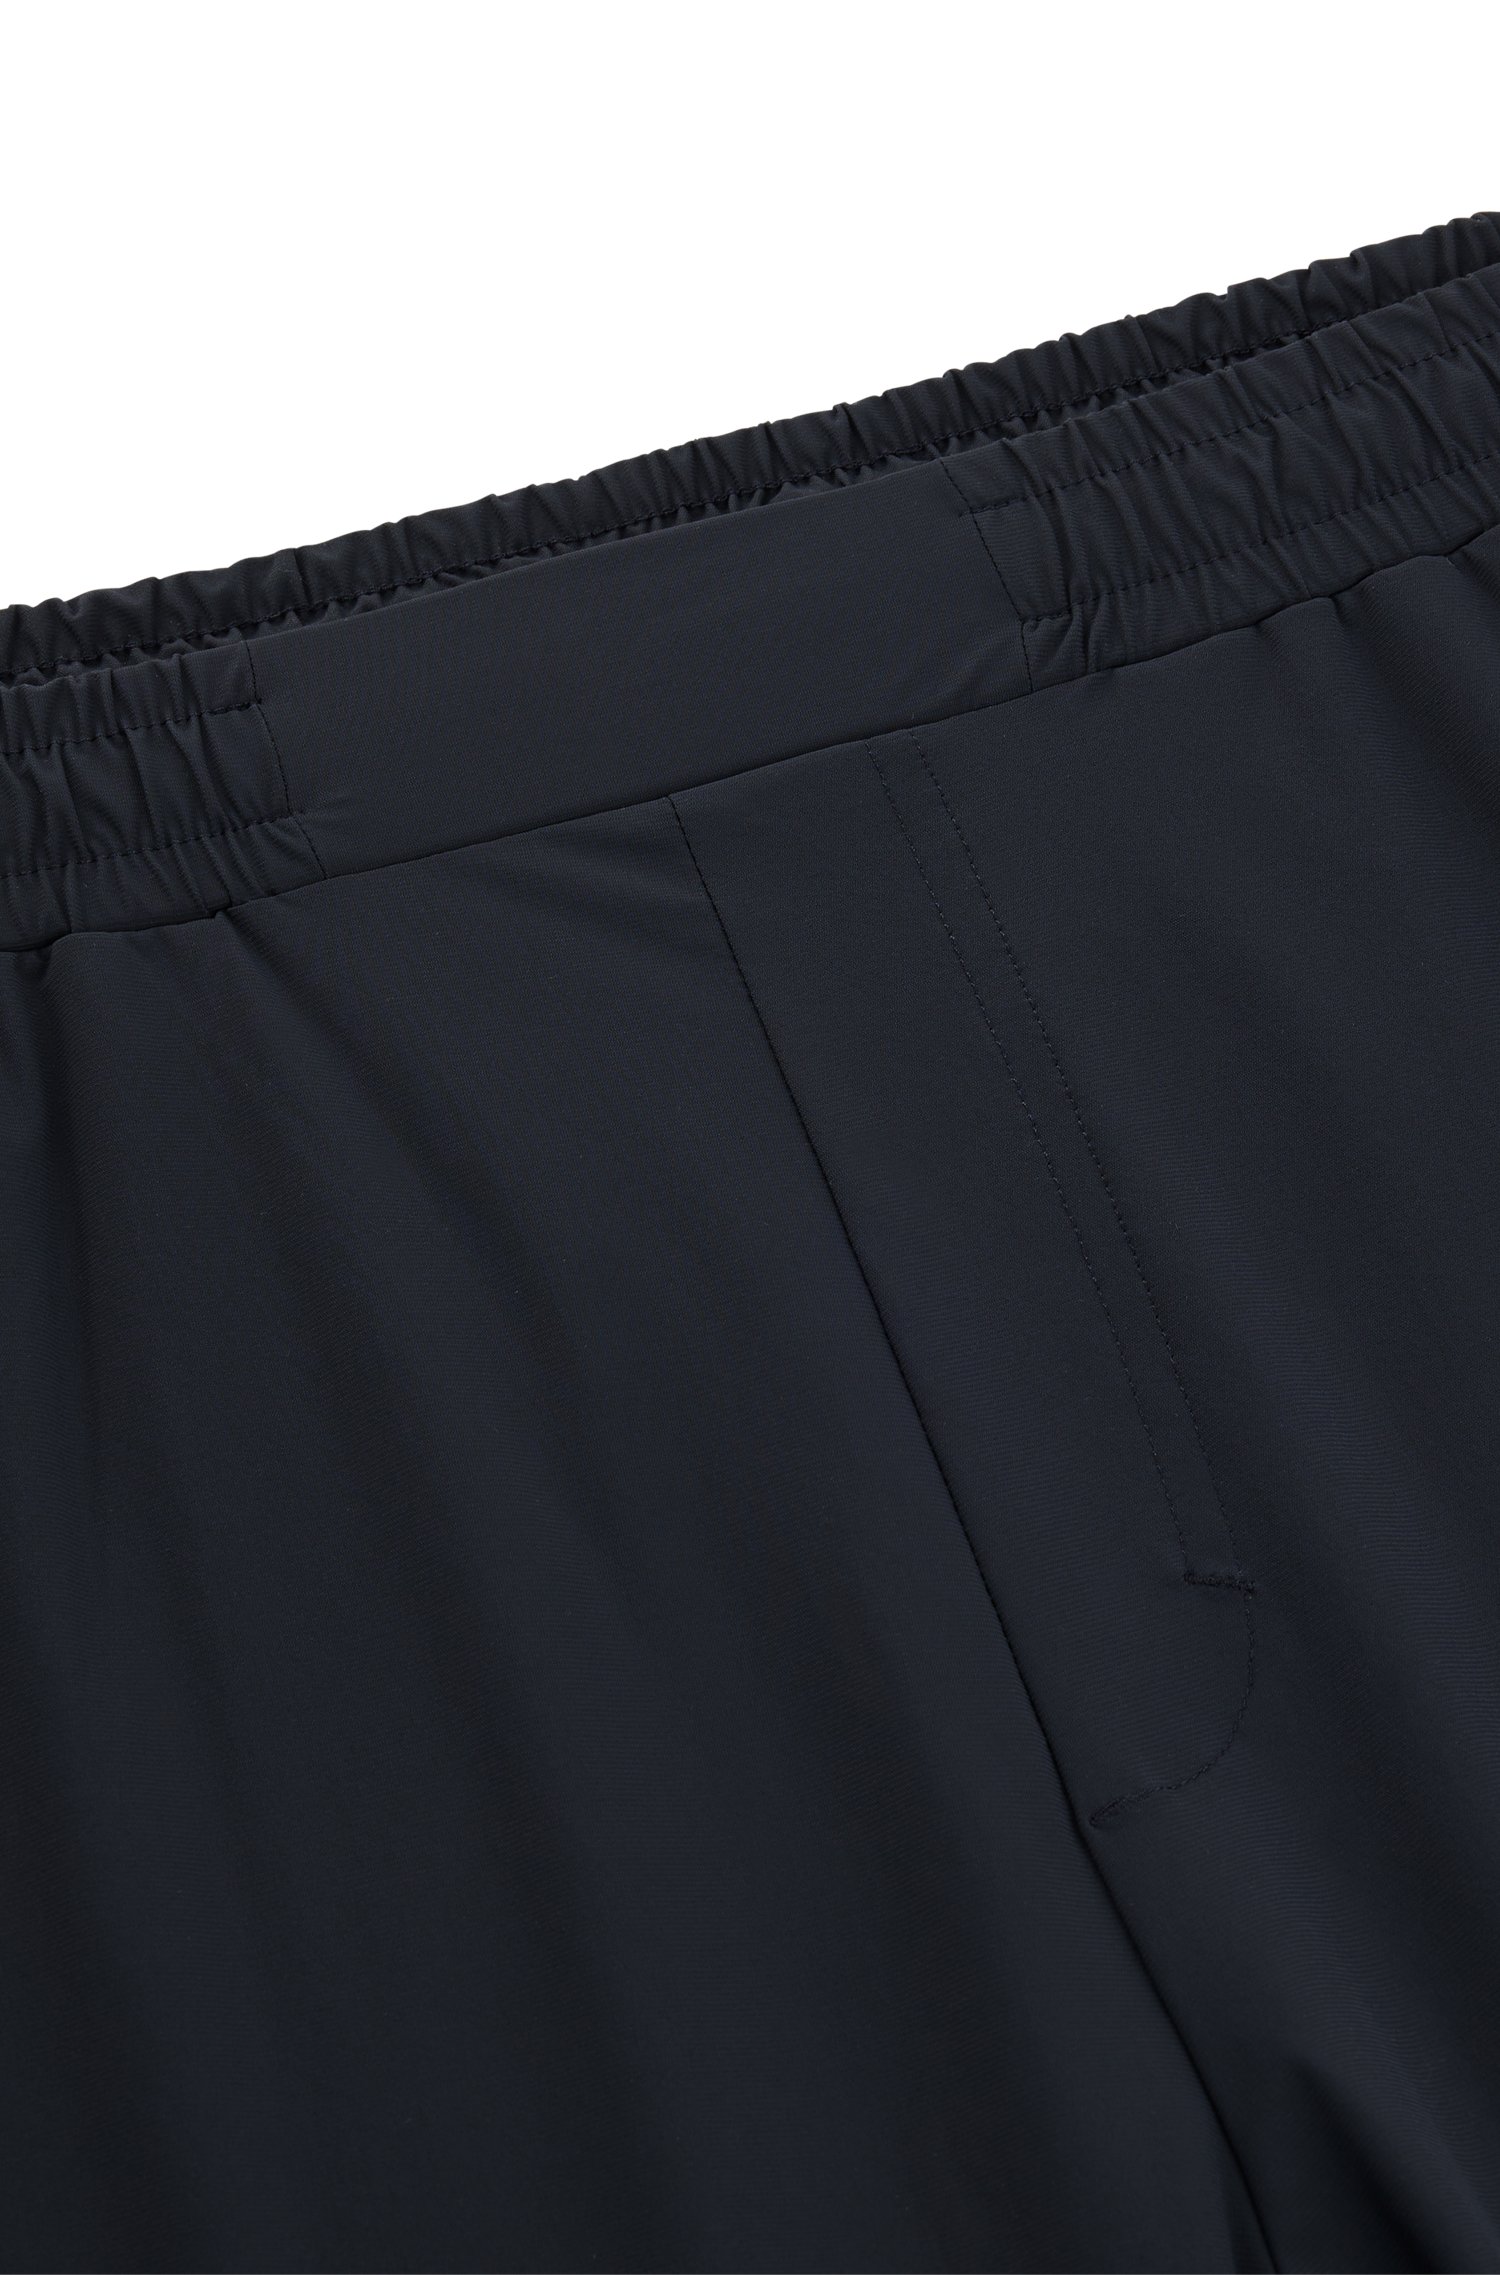 Pantalones de chándal regular fit con diseño reflectante decorativo